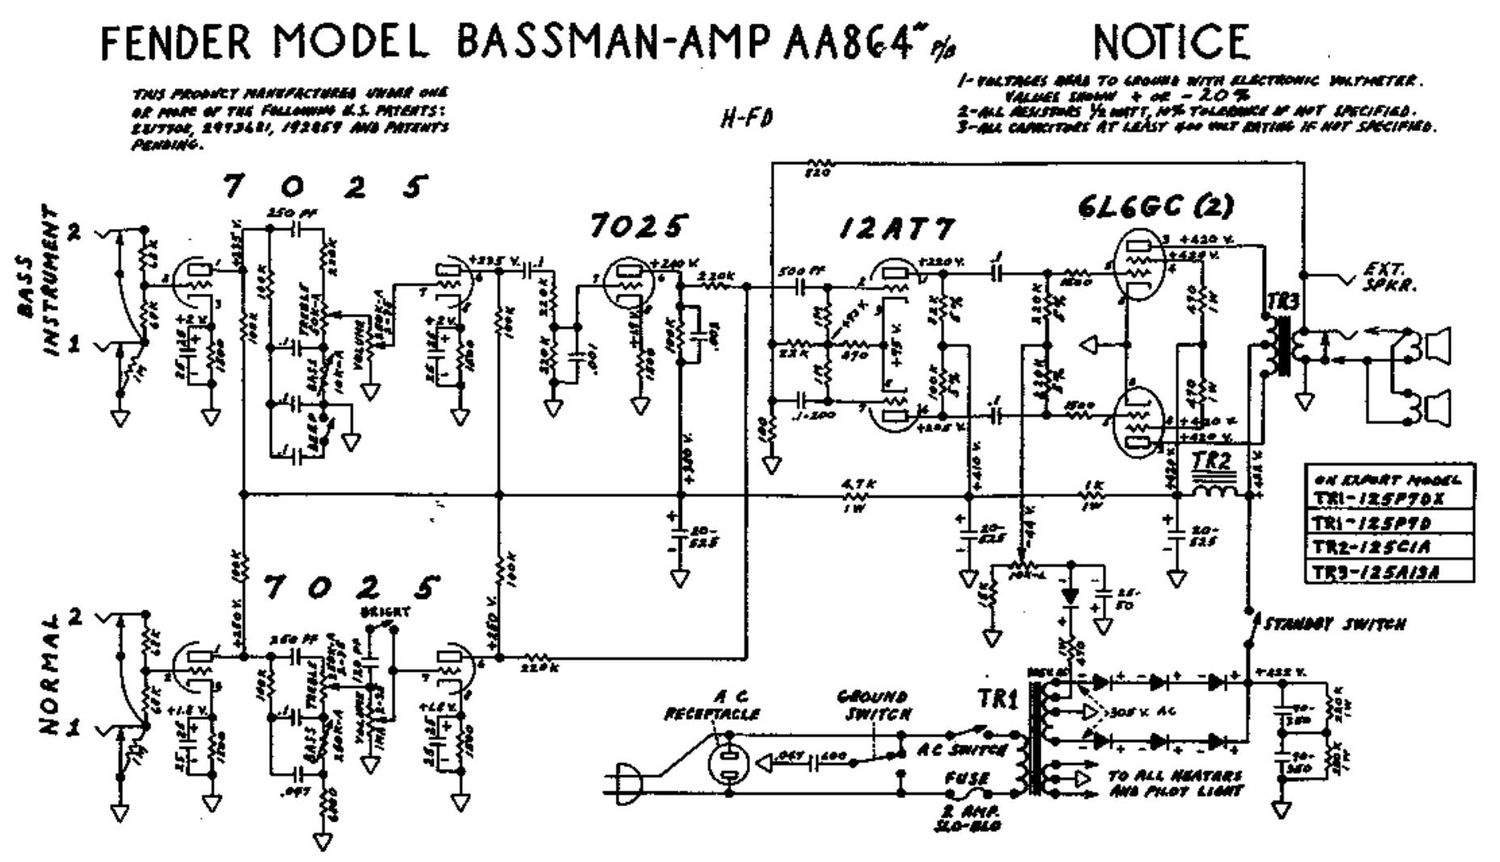 fender bassman aa864 schematic